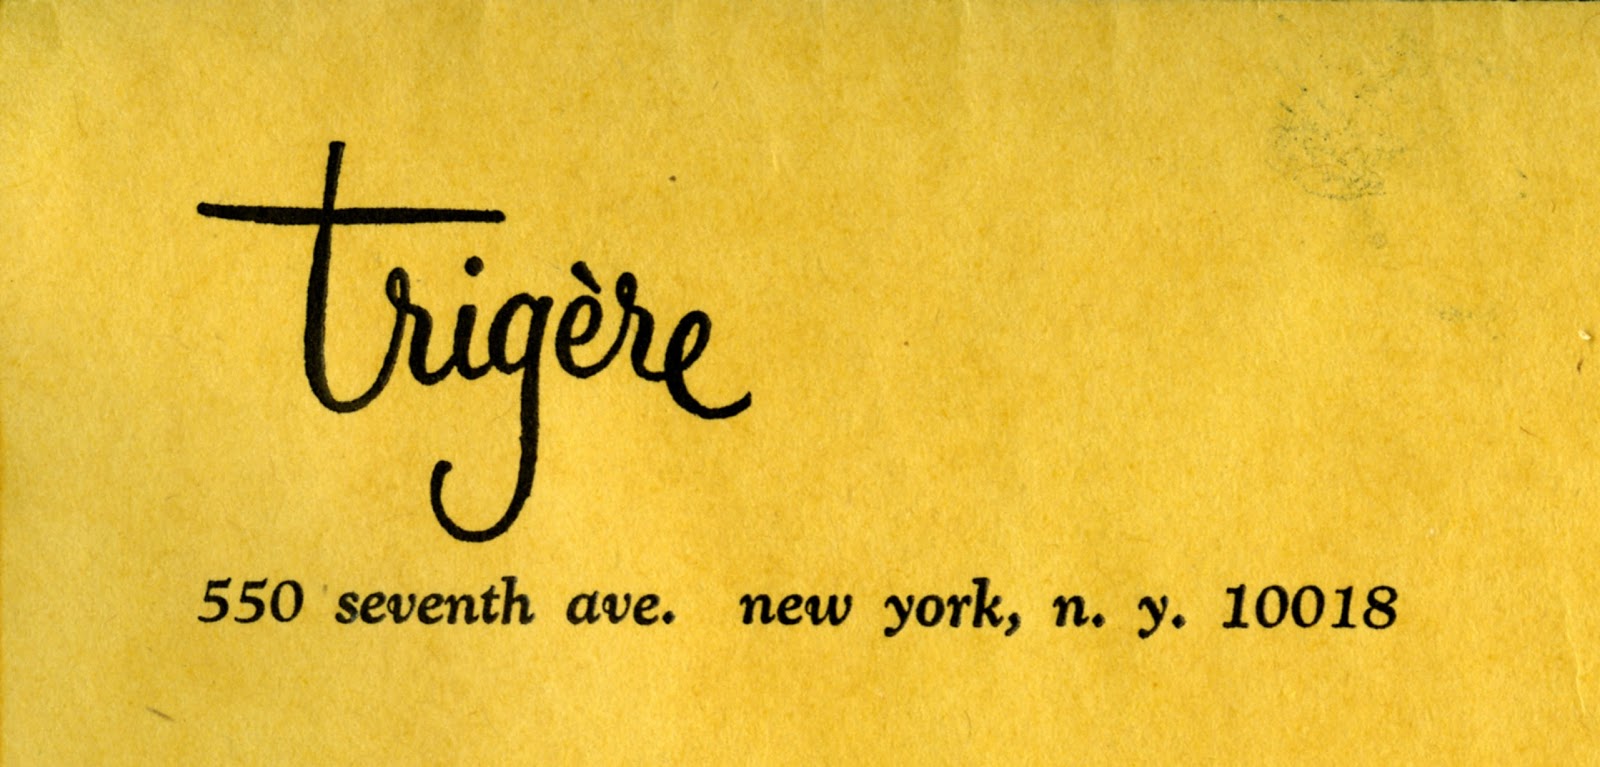 Trigere letterhead, black script logo on yellow paper with address below.